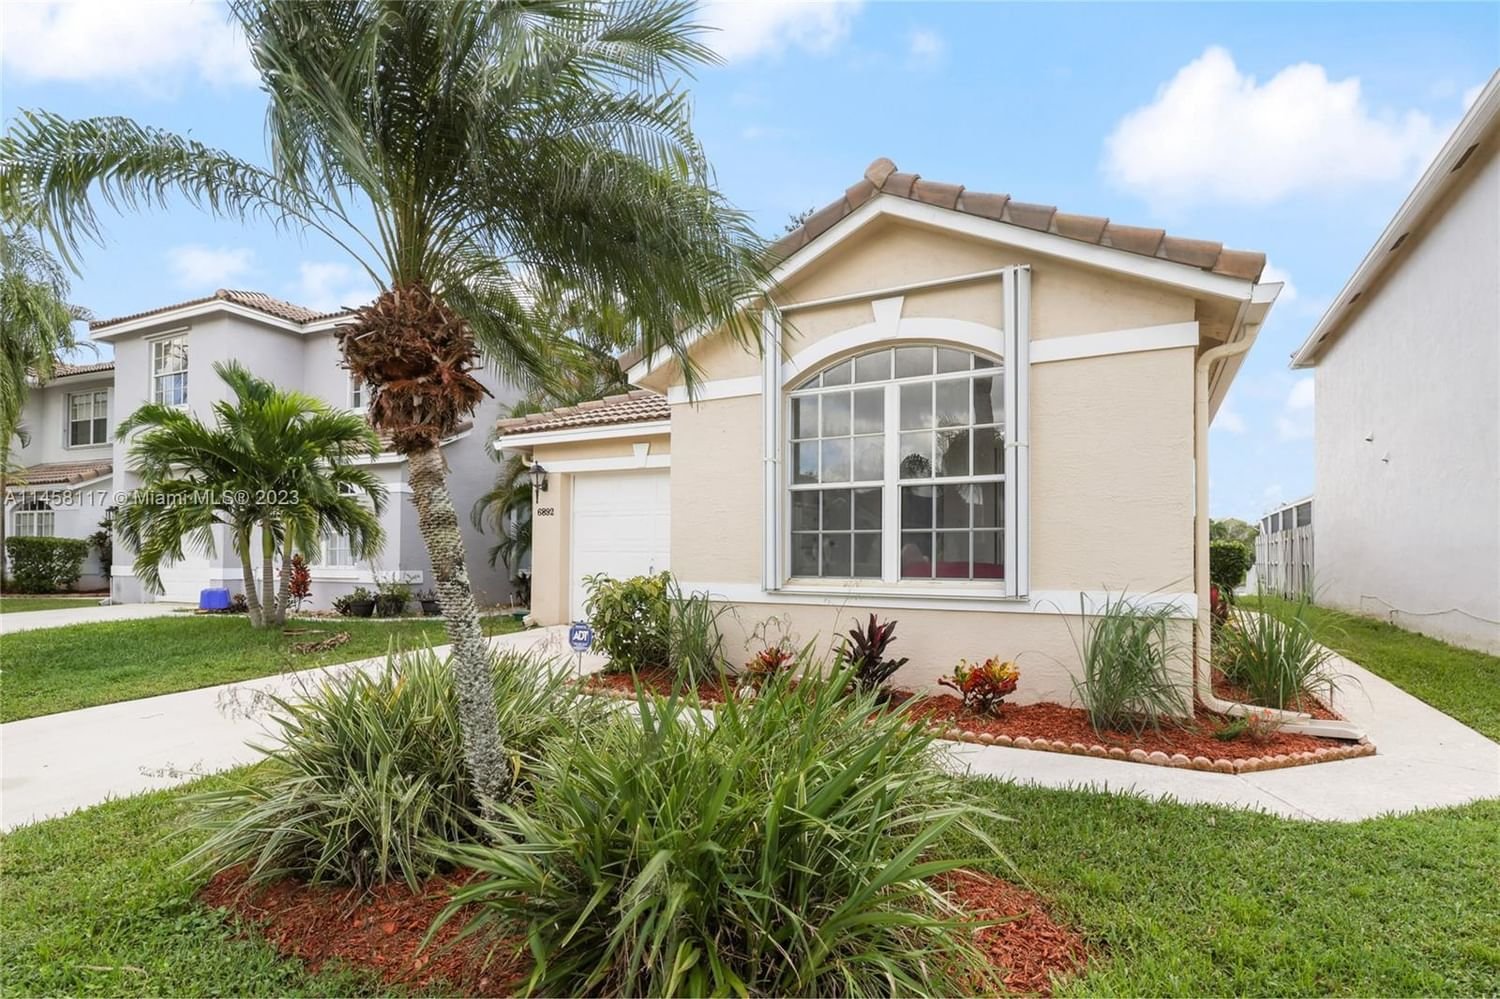 Real estate property located at 6892 Big Pine Key St, Palm Beach County, Lake Worth, FL